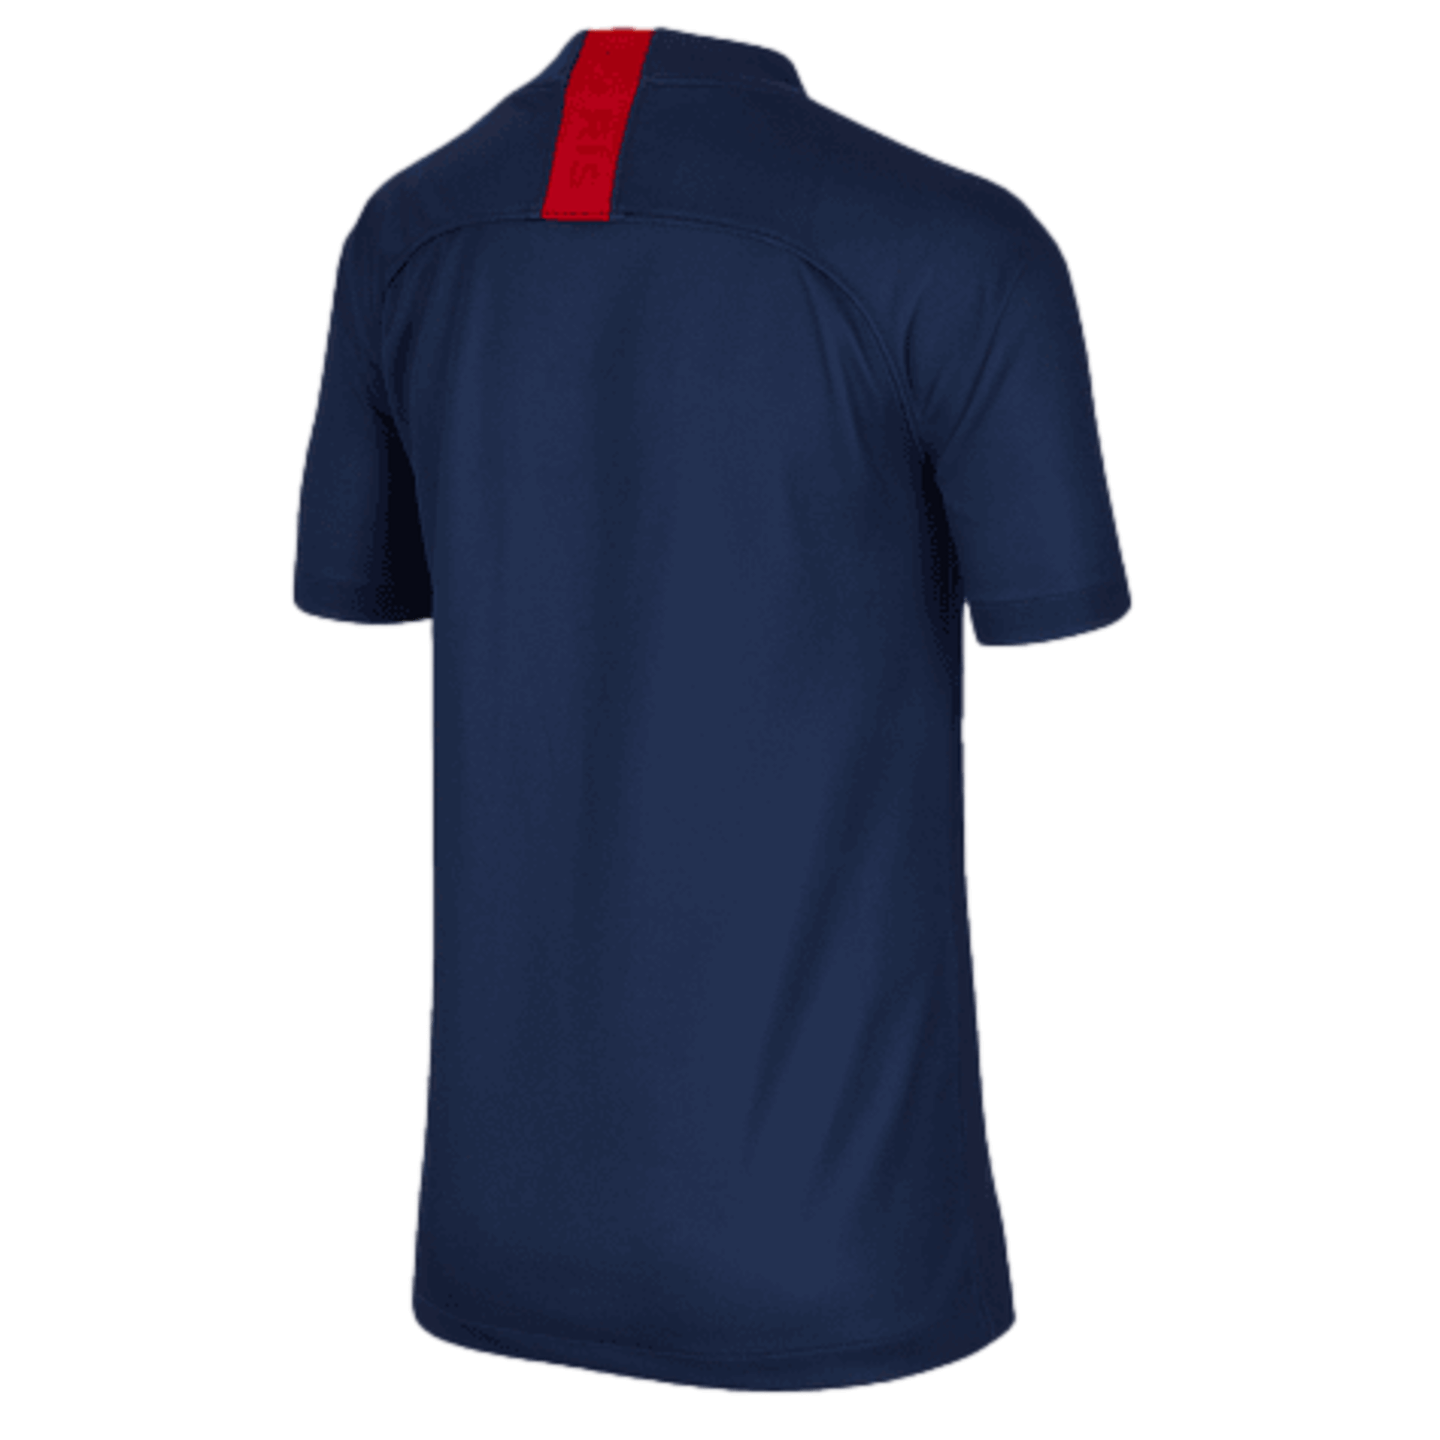 Camiseta Nike Paris Saint-Germain 19/20 Juvenil Primera Equipación